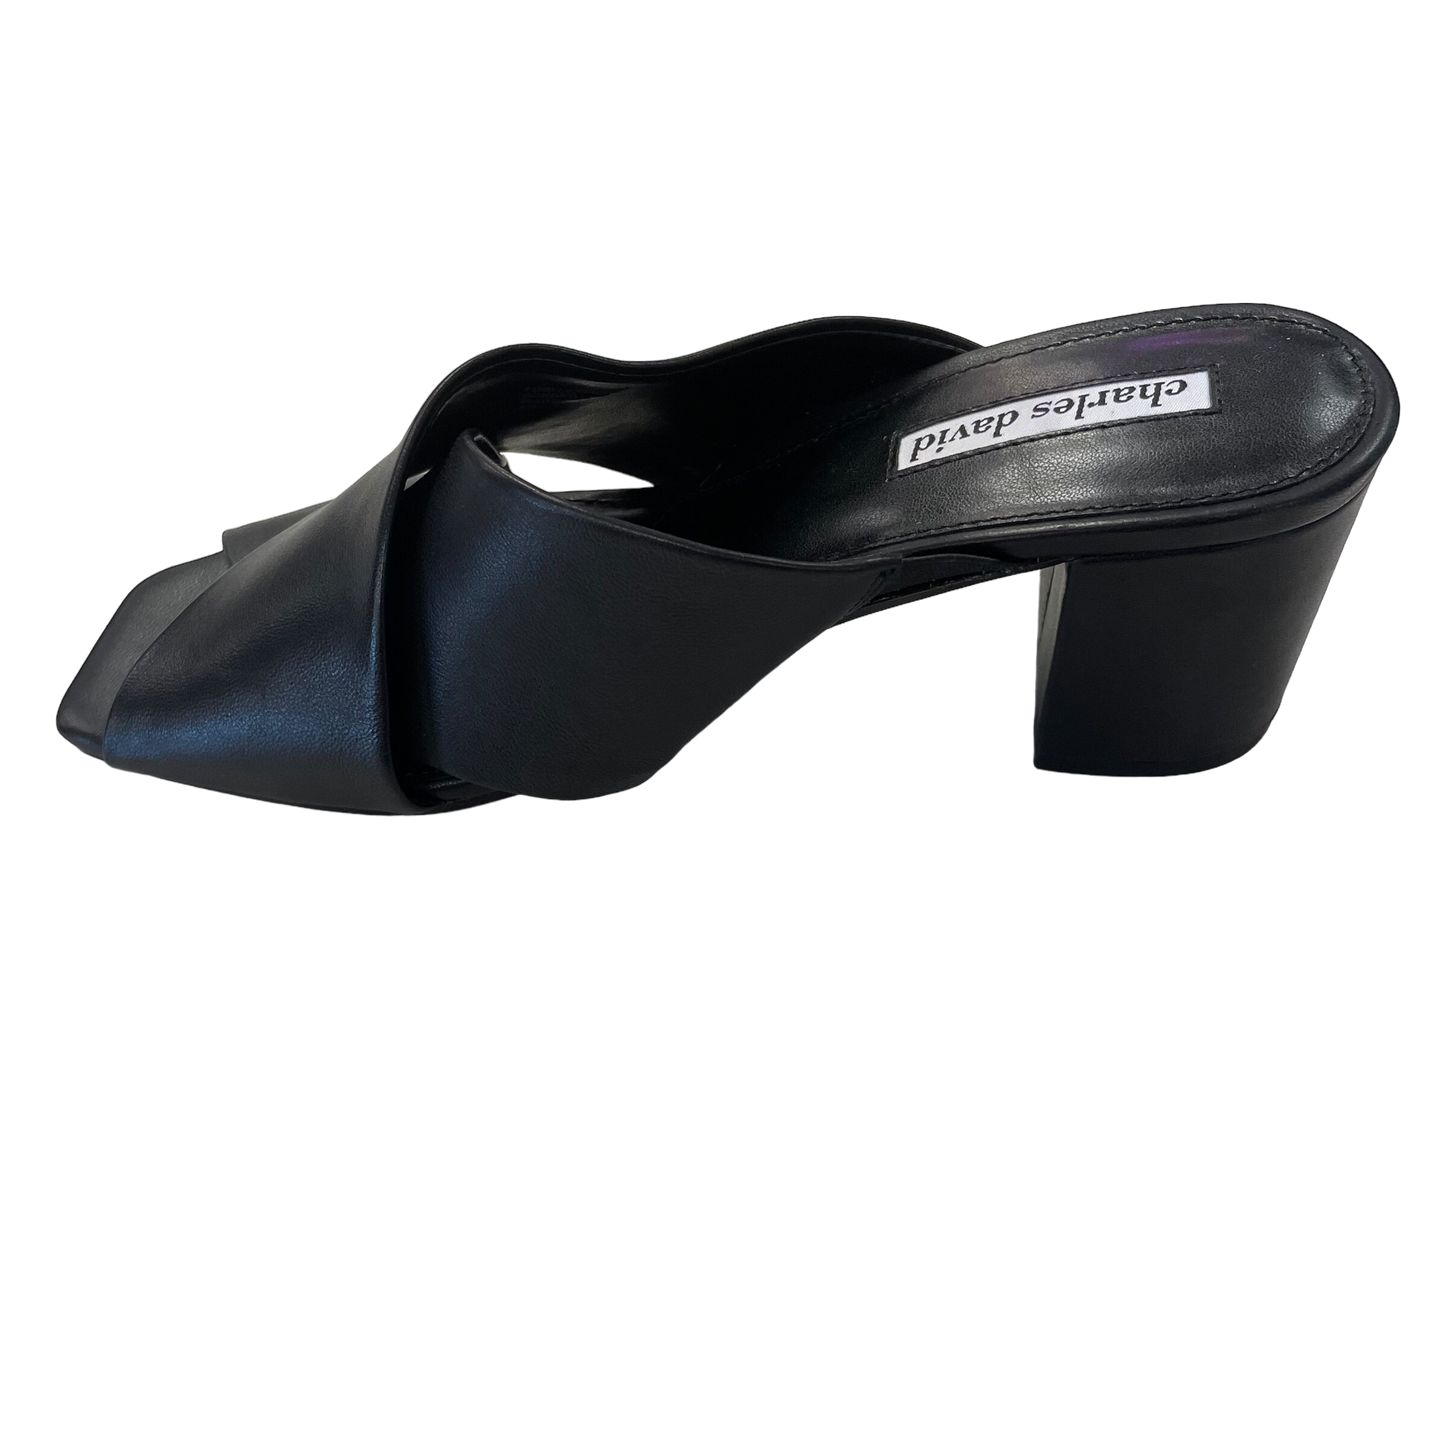 Black Shoes Heels Block Charles David, Size 7.5